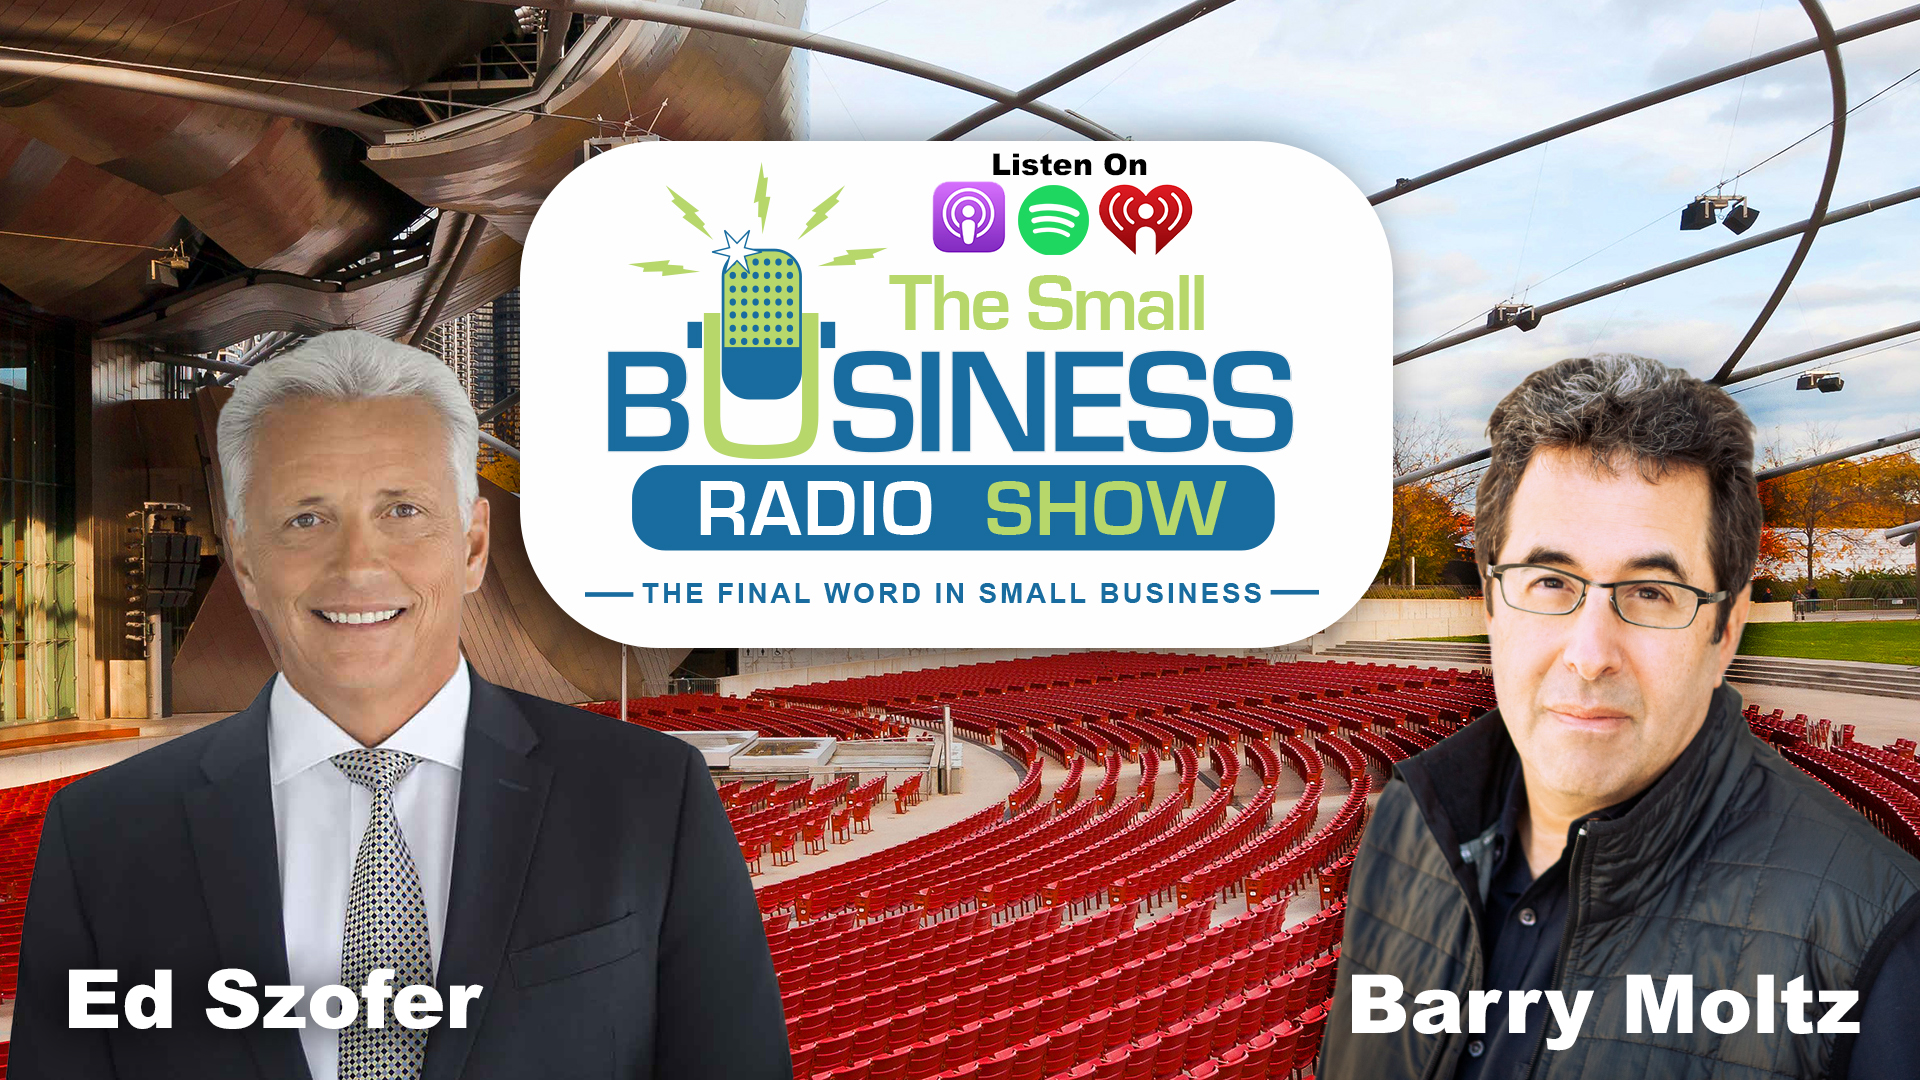 Ed Szofer on The Small Business Radio Show